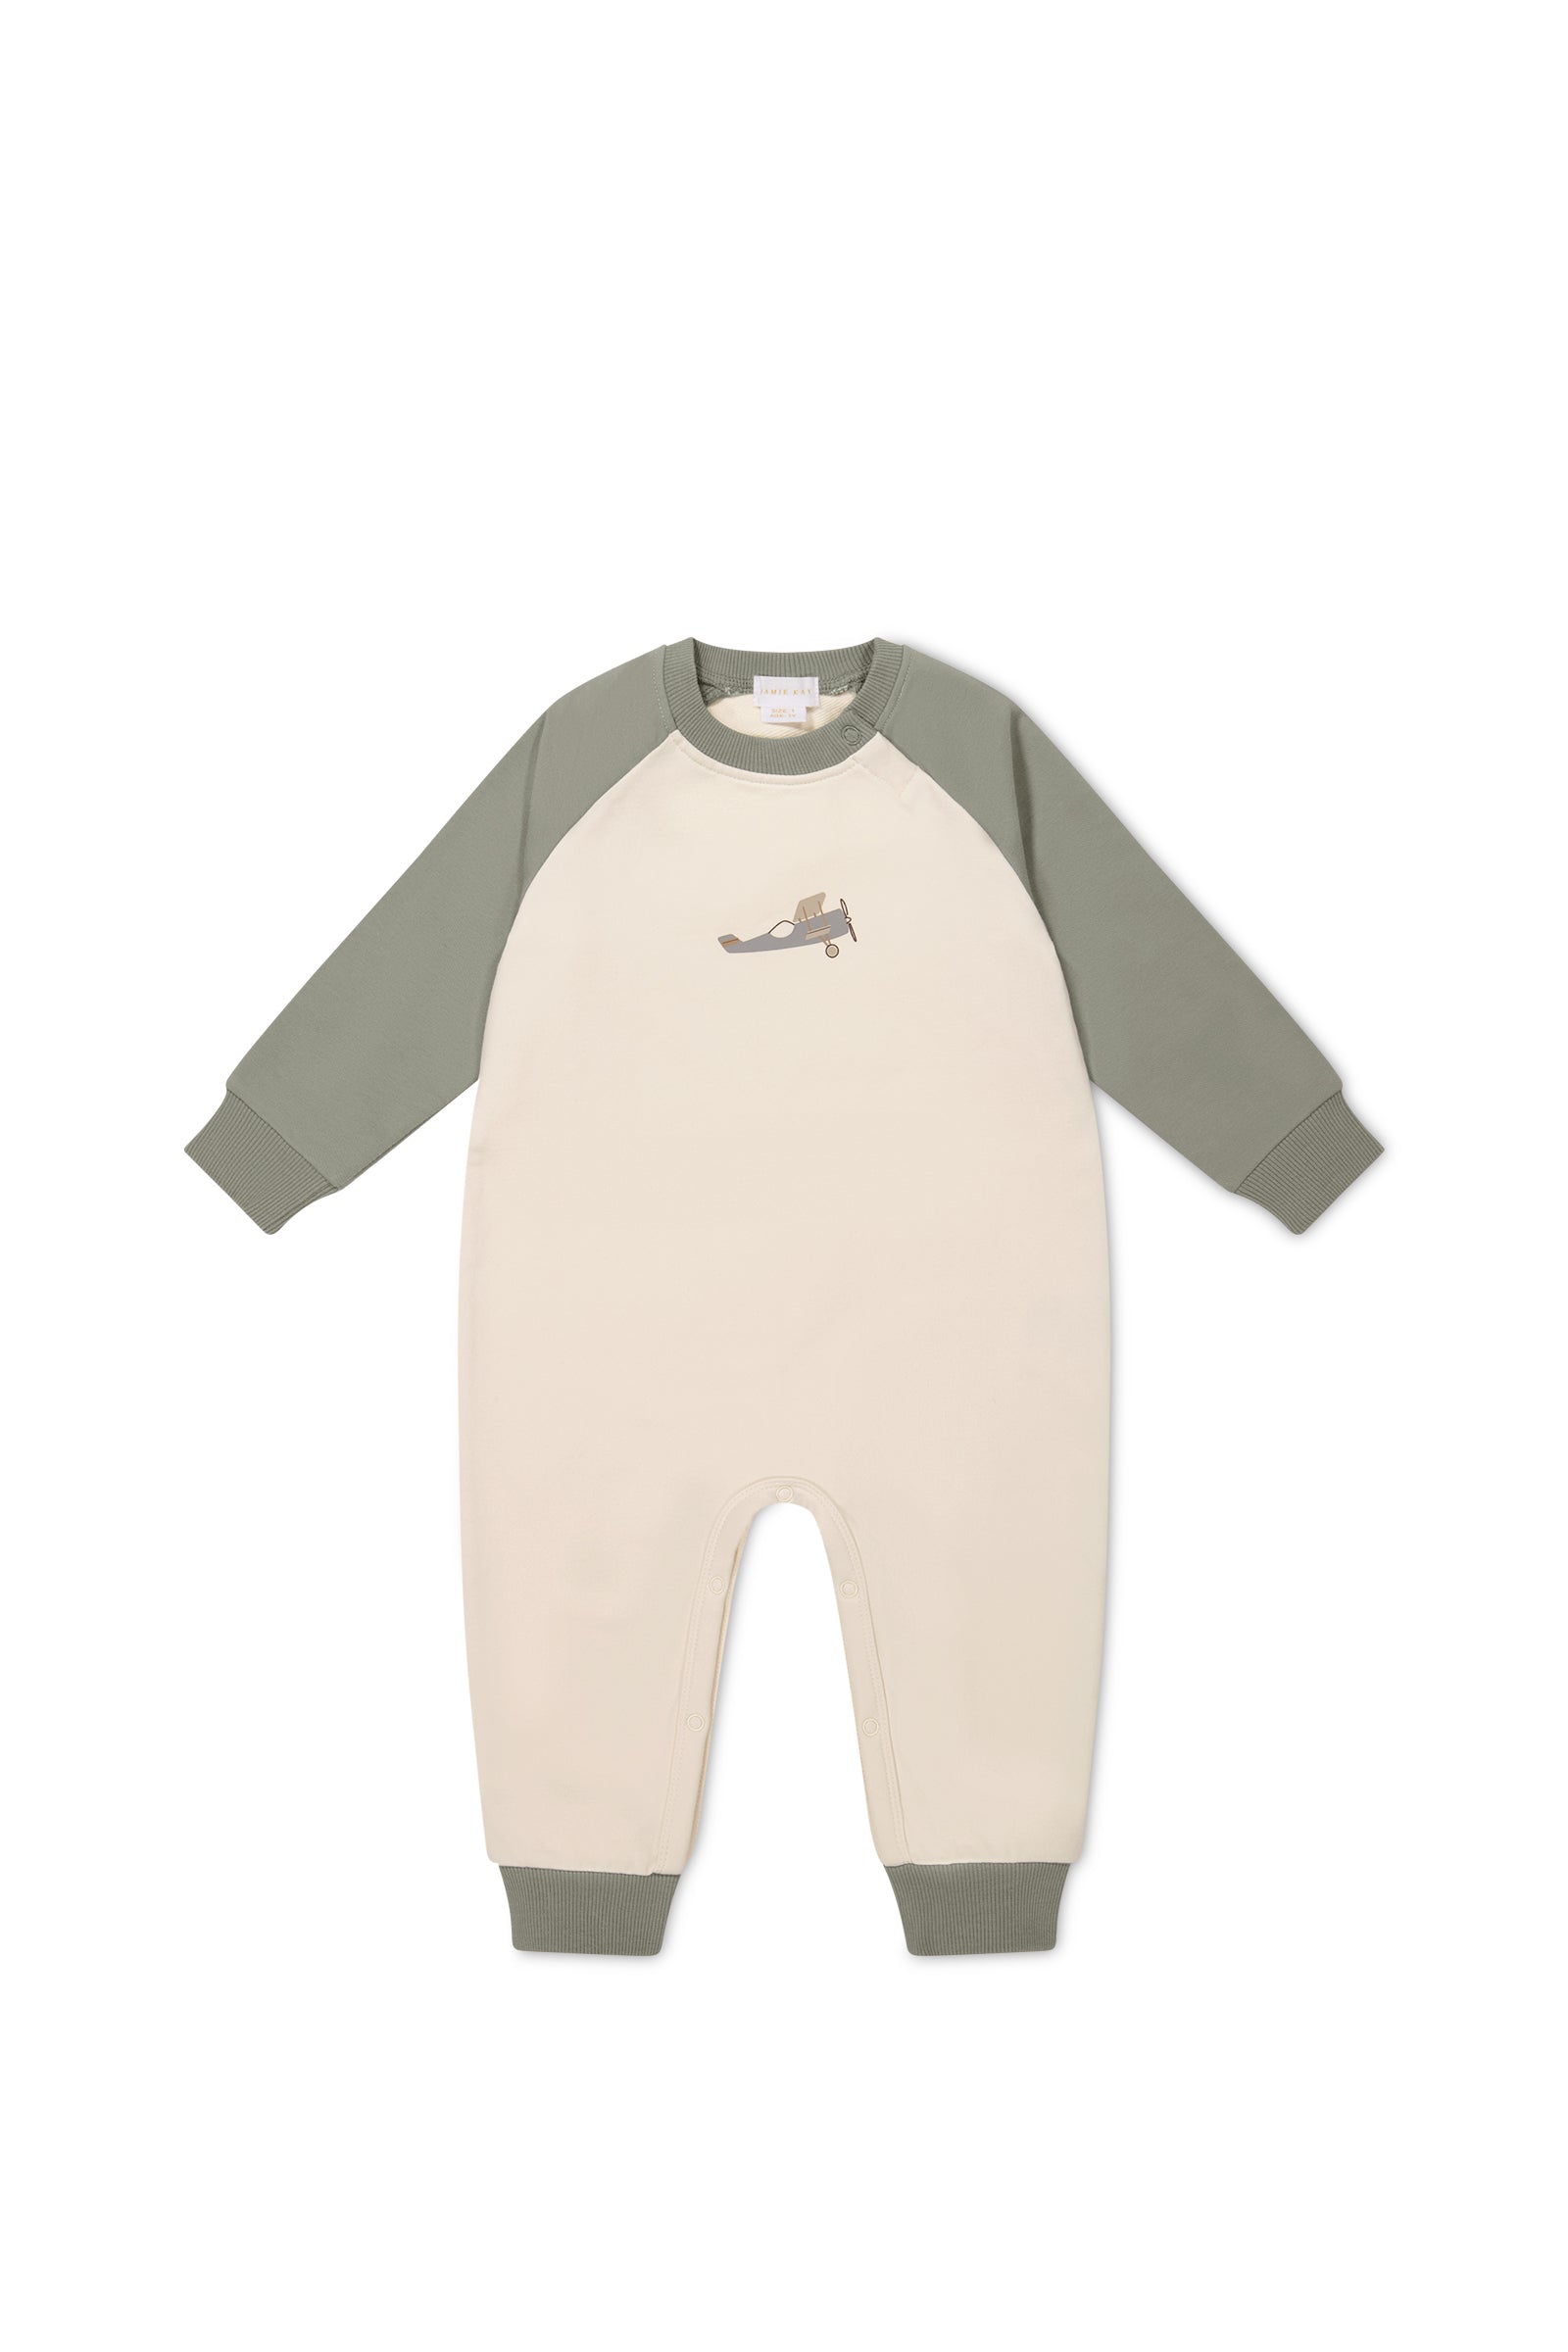 Organic Cotton Tao Sweatshirt Onepiece - Milford Sound Avion-Clothing & Accessories-Jamie Kay-The Bay Room